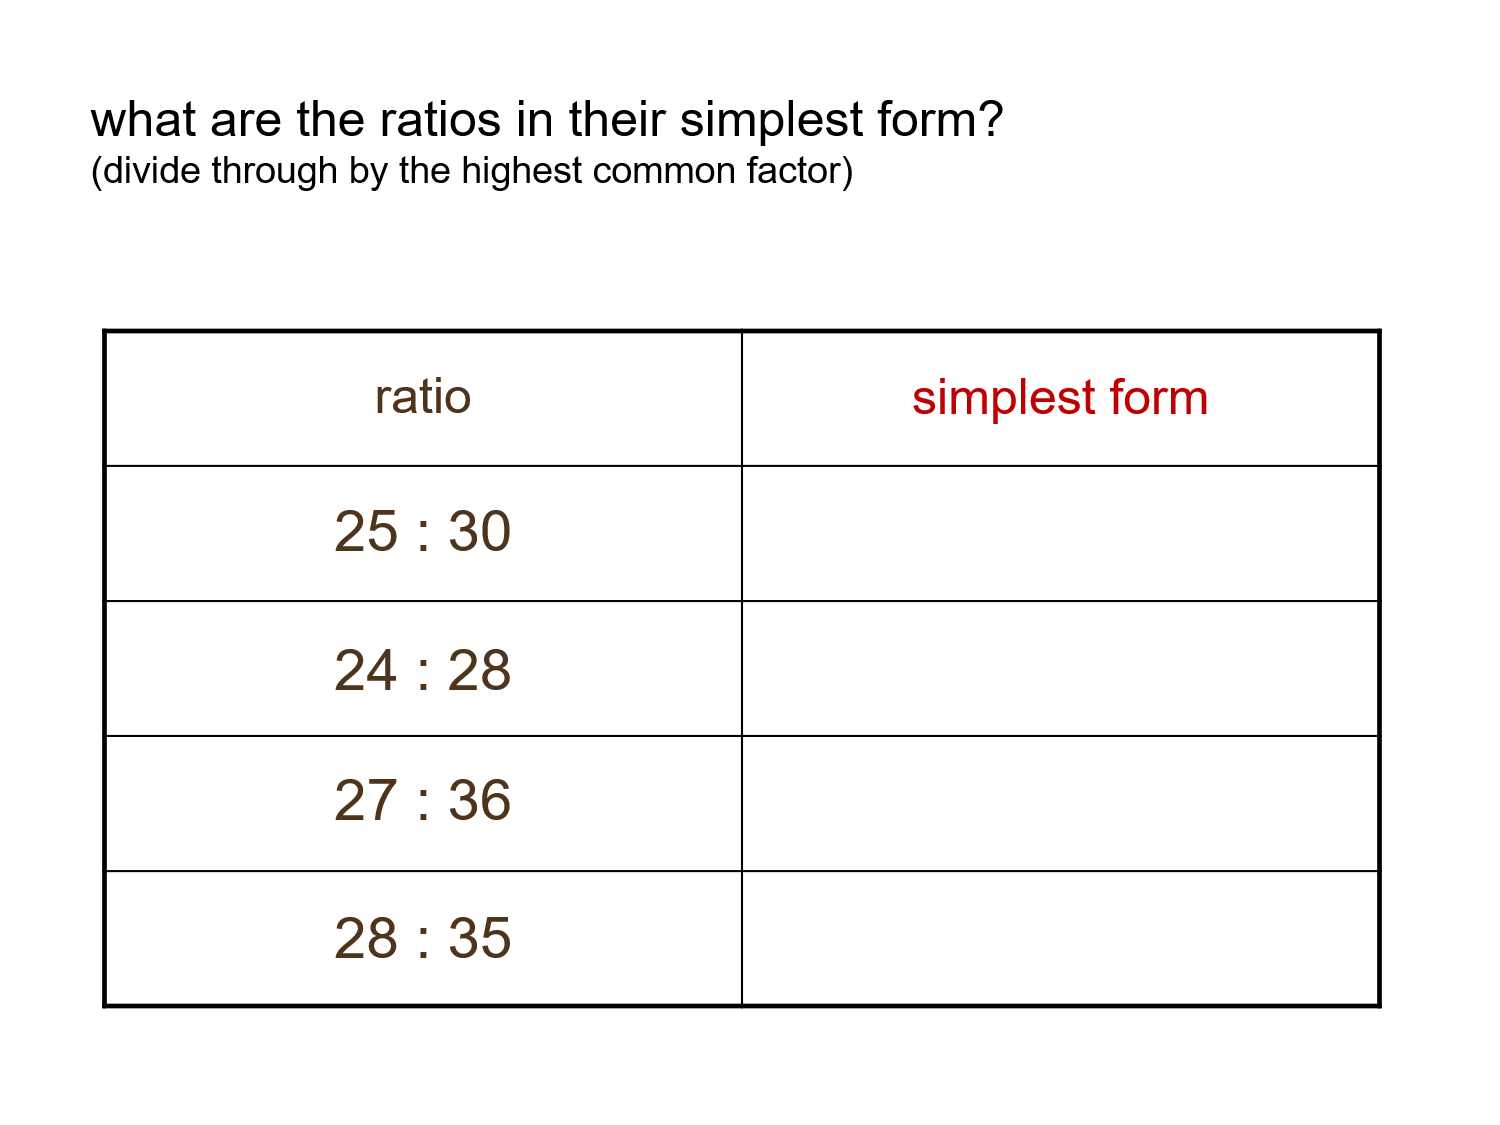 median-don-steward-mathematics-teaching-simplest-forms-of-ratios